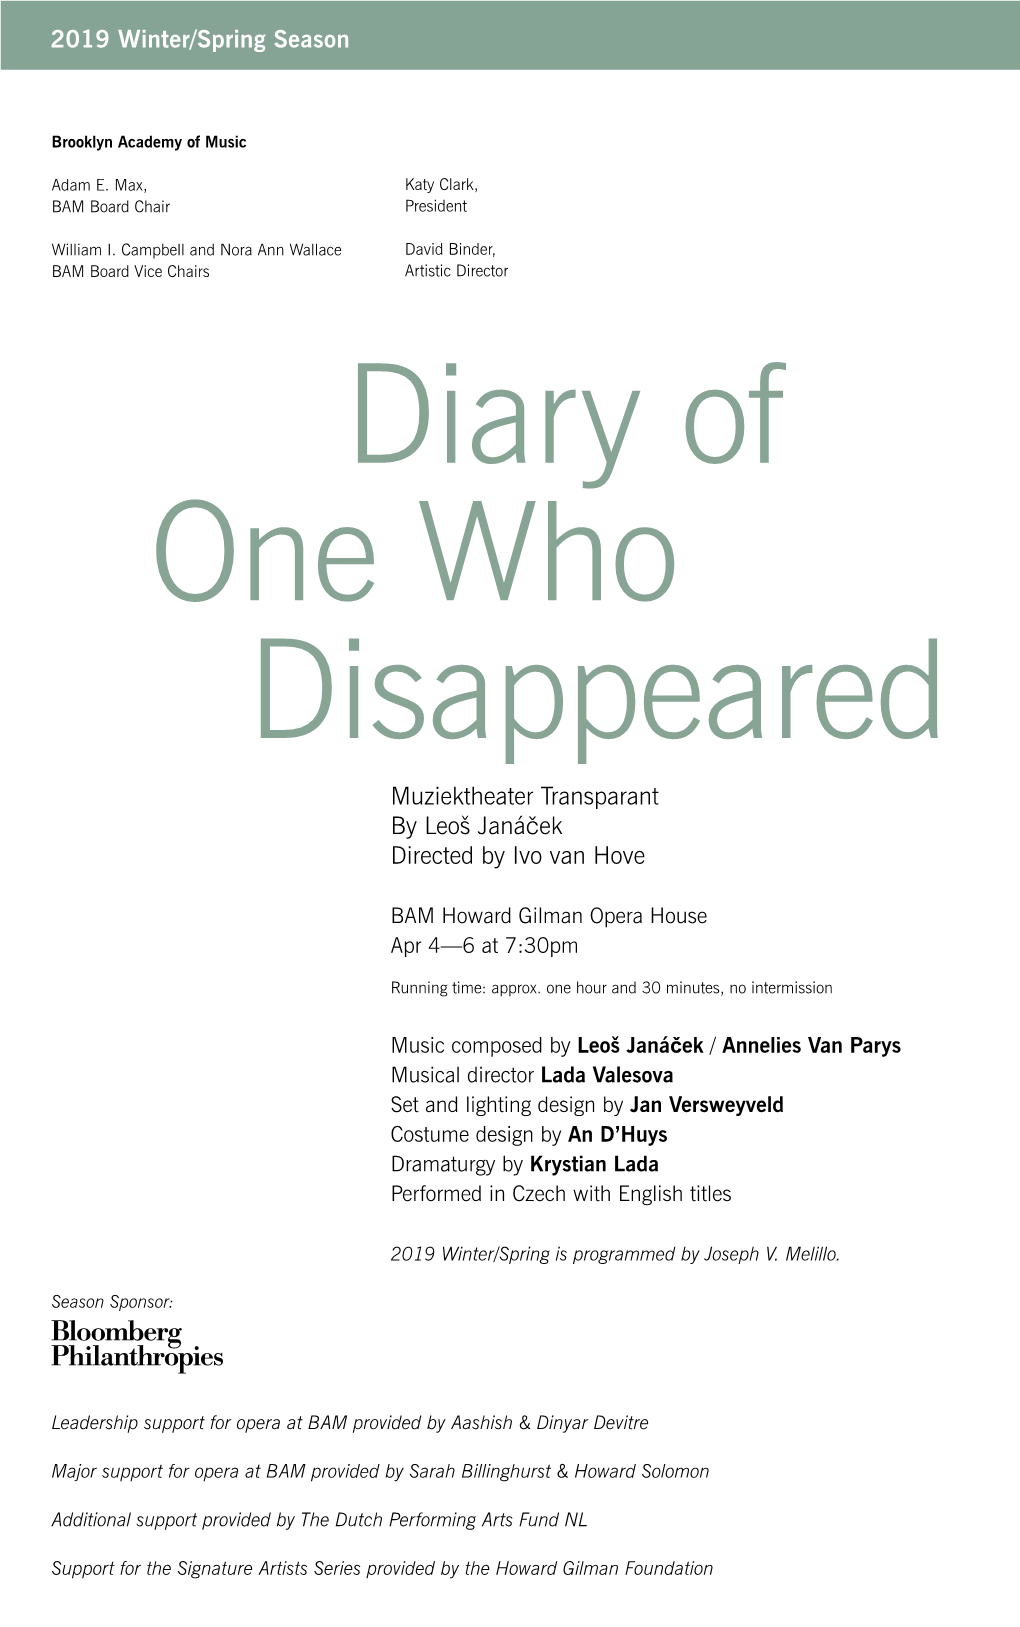 Diary of One Who Disappeared Muziektheater Transparant by Leoš Janáček Directed by Ivo Van Hove